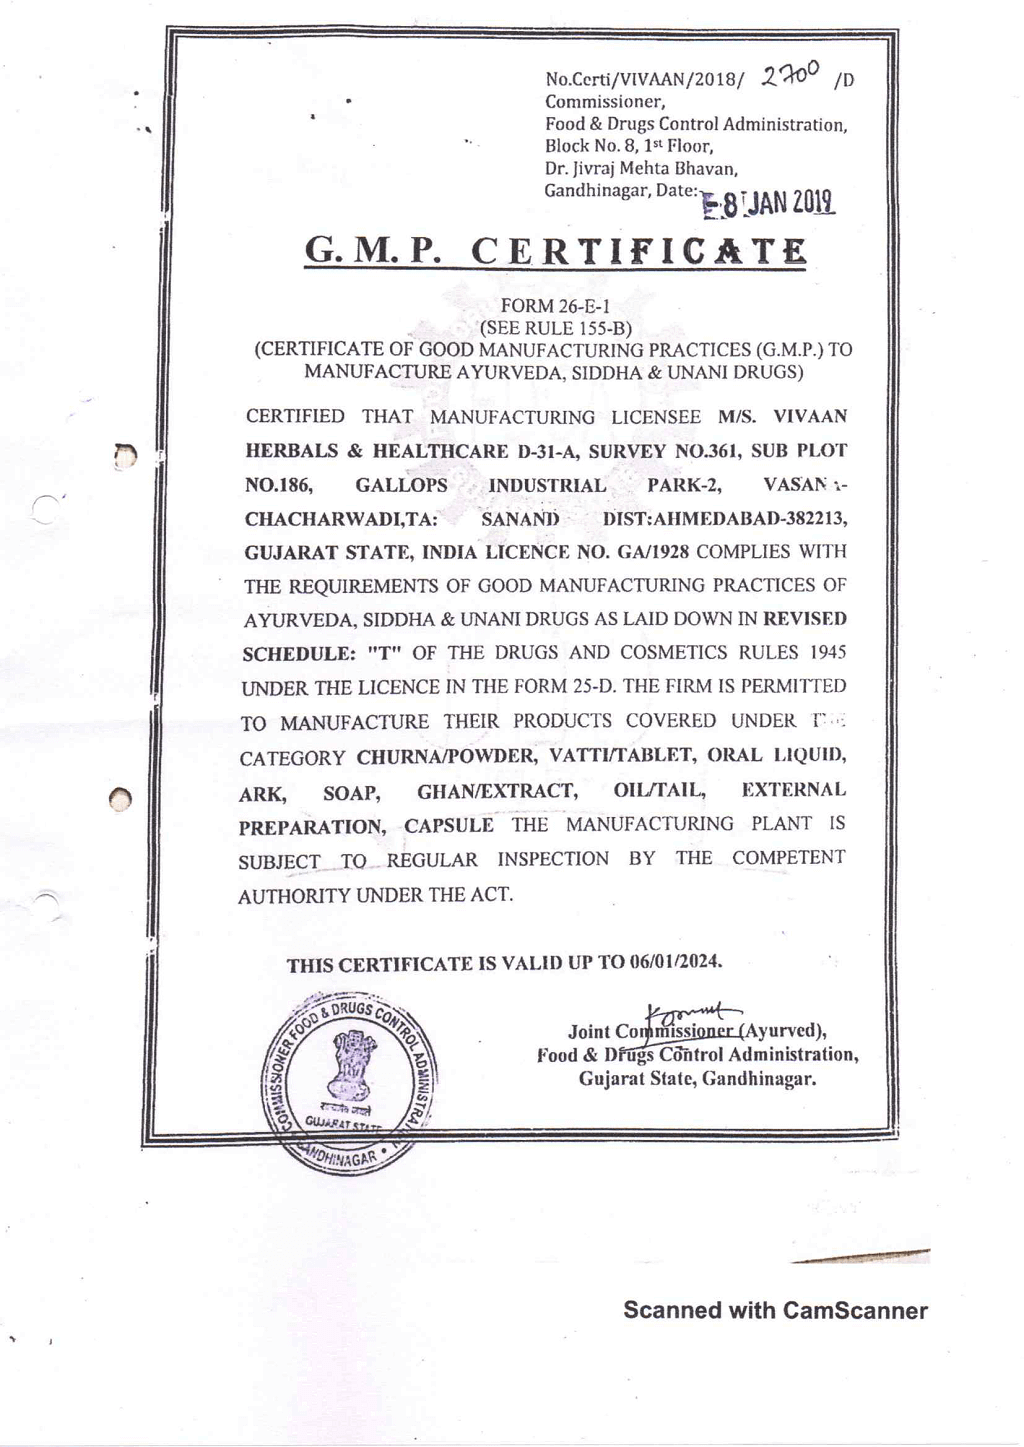 gmp-certificate-vivaan